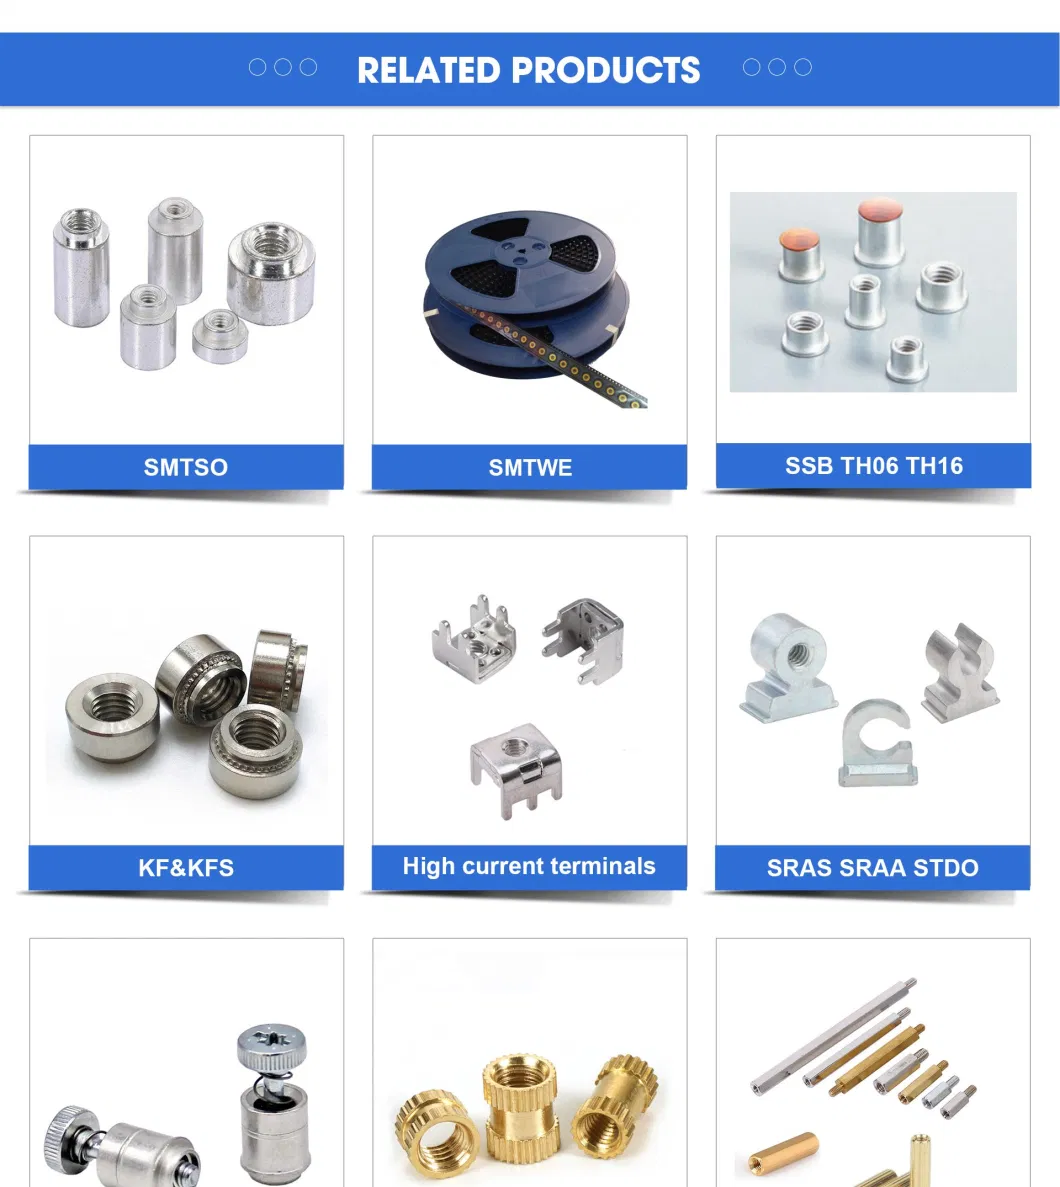 Smtso-M2.5-10et, SMD Nut, Weld Nut, Reelfast/Surface Mount Fasteners/SMT Standoff/SMT Nut, Brass Reel